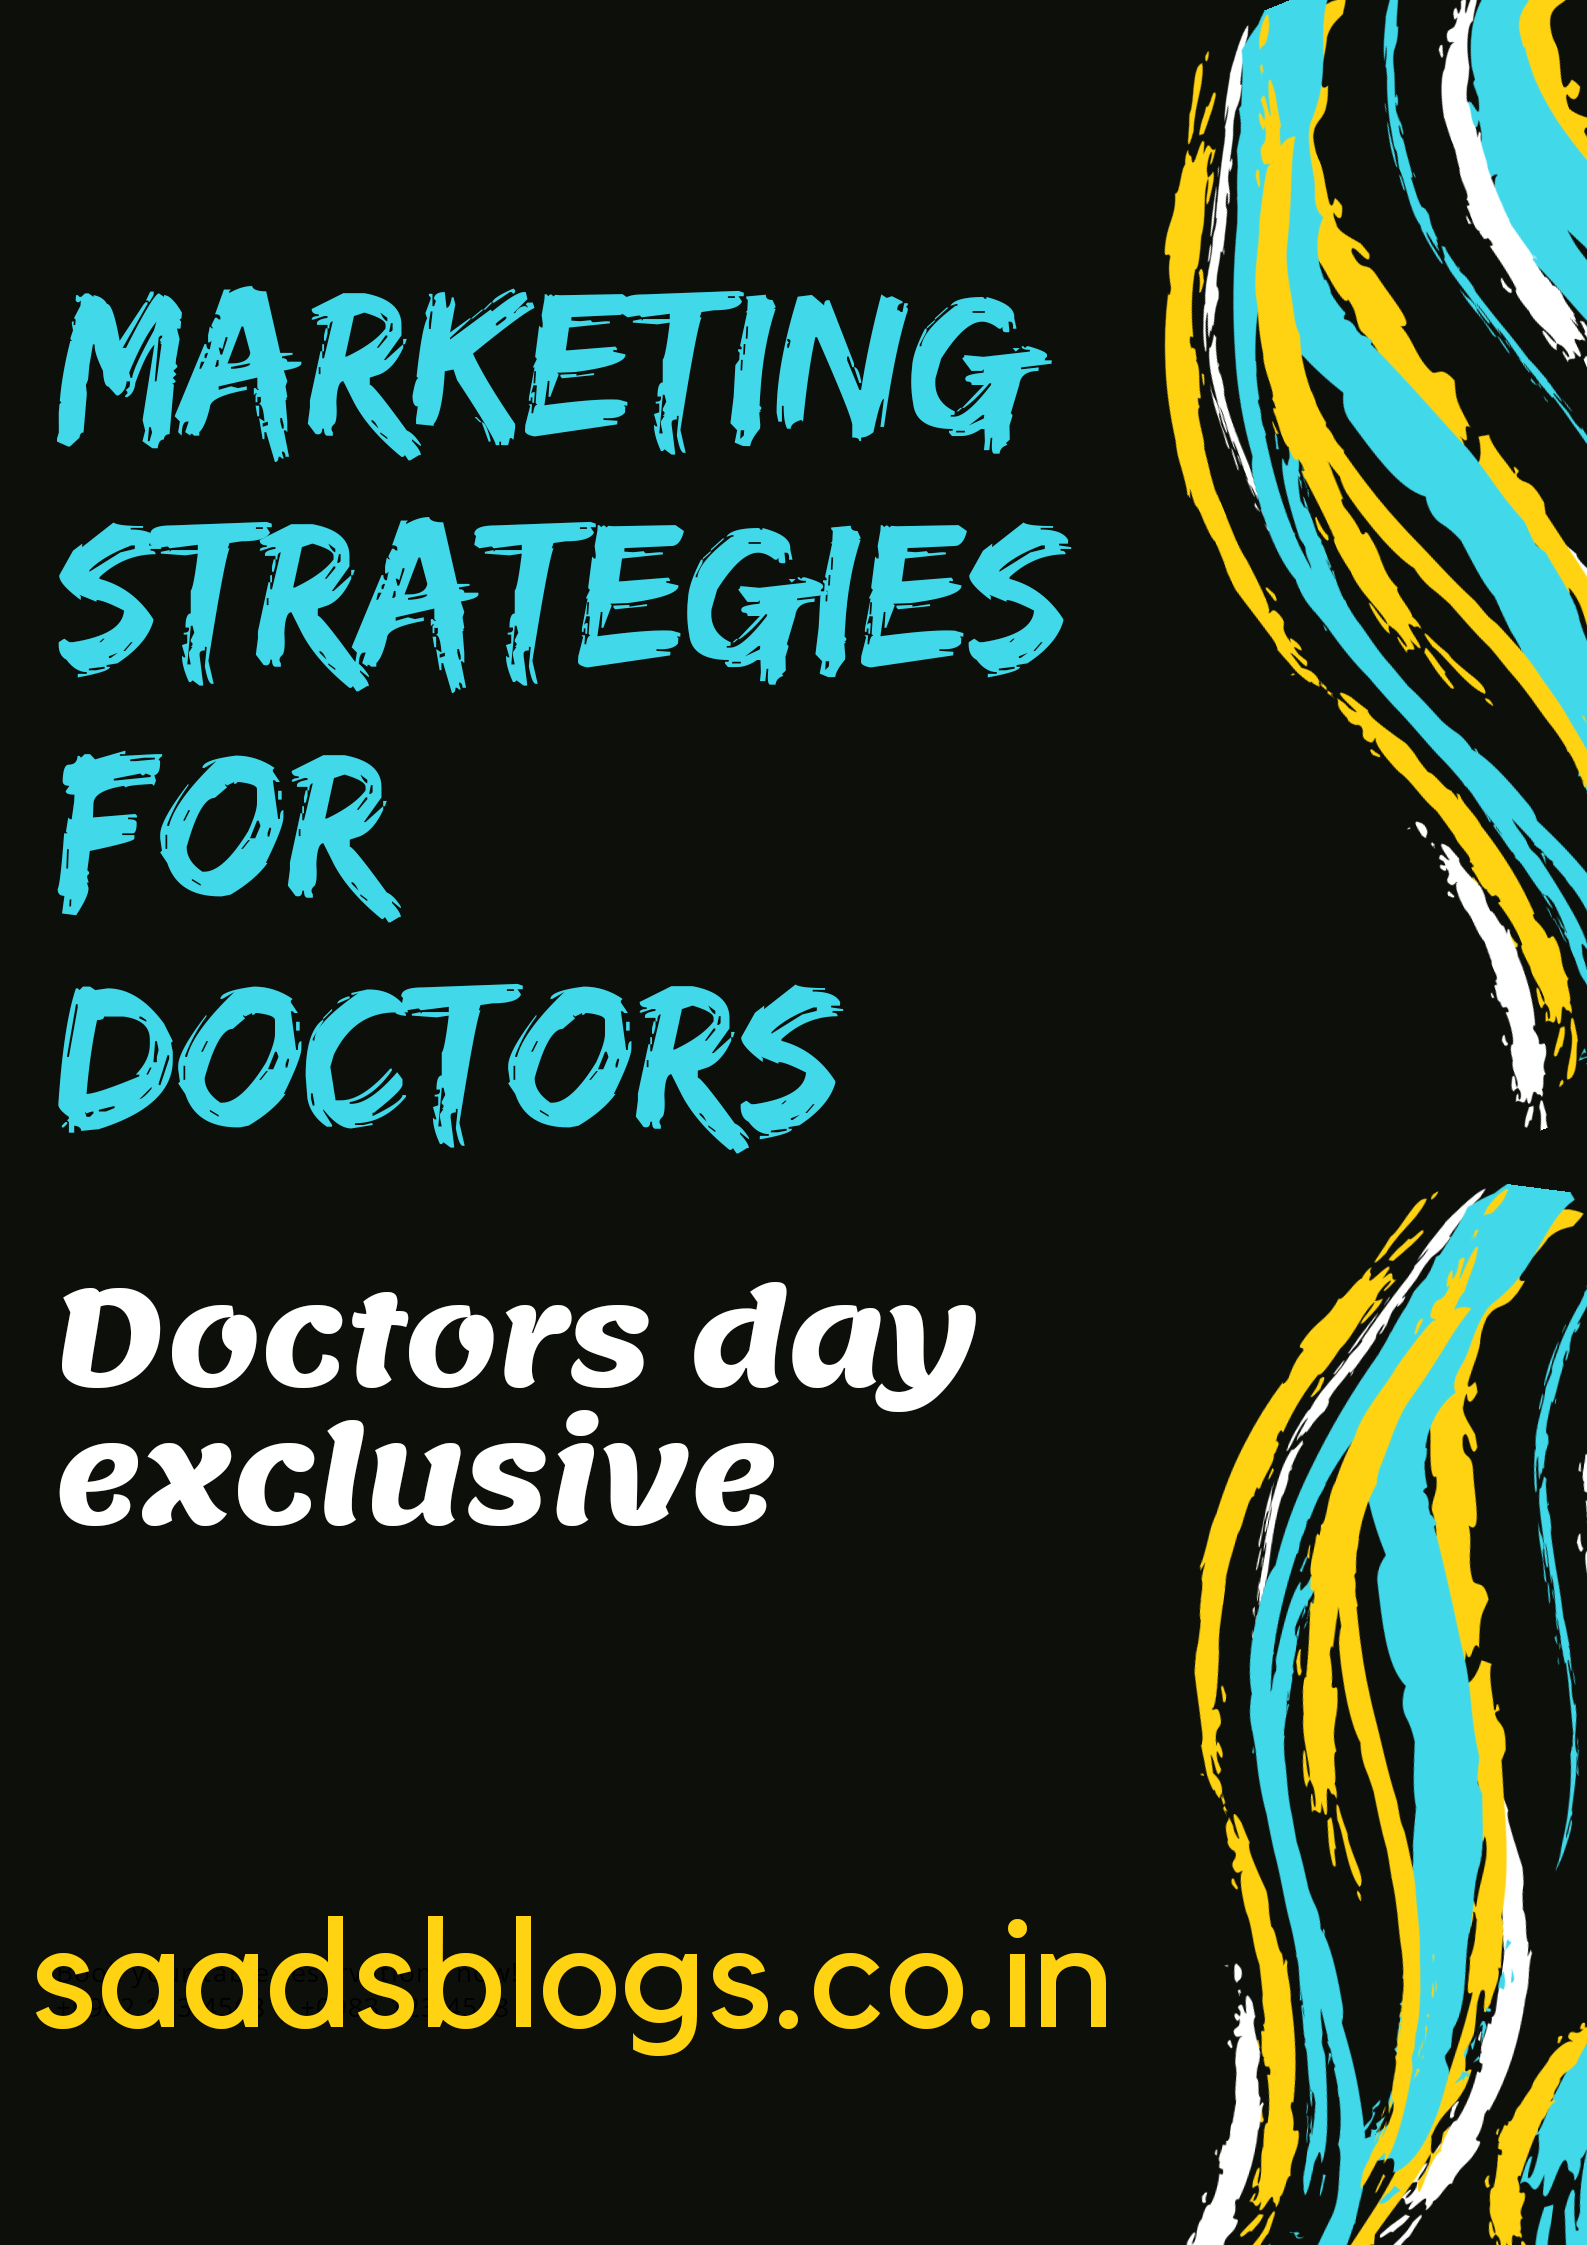 Marketing strategies for doctors.